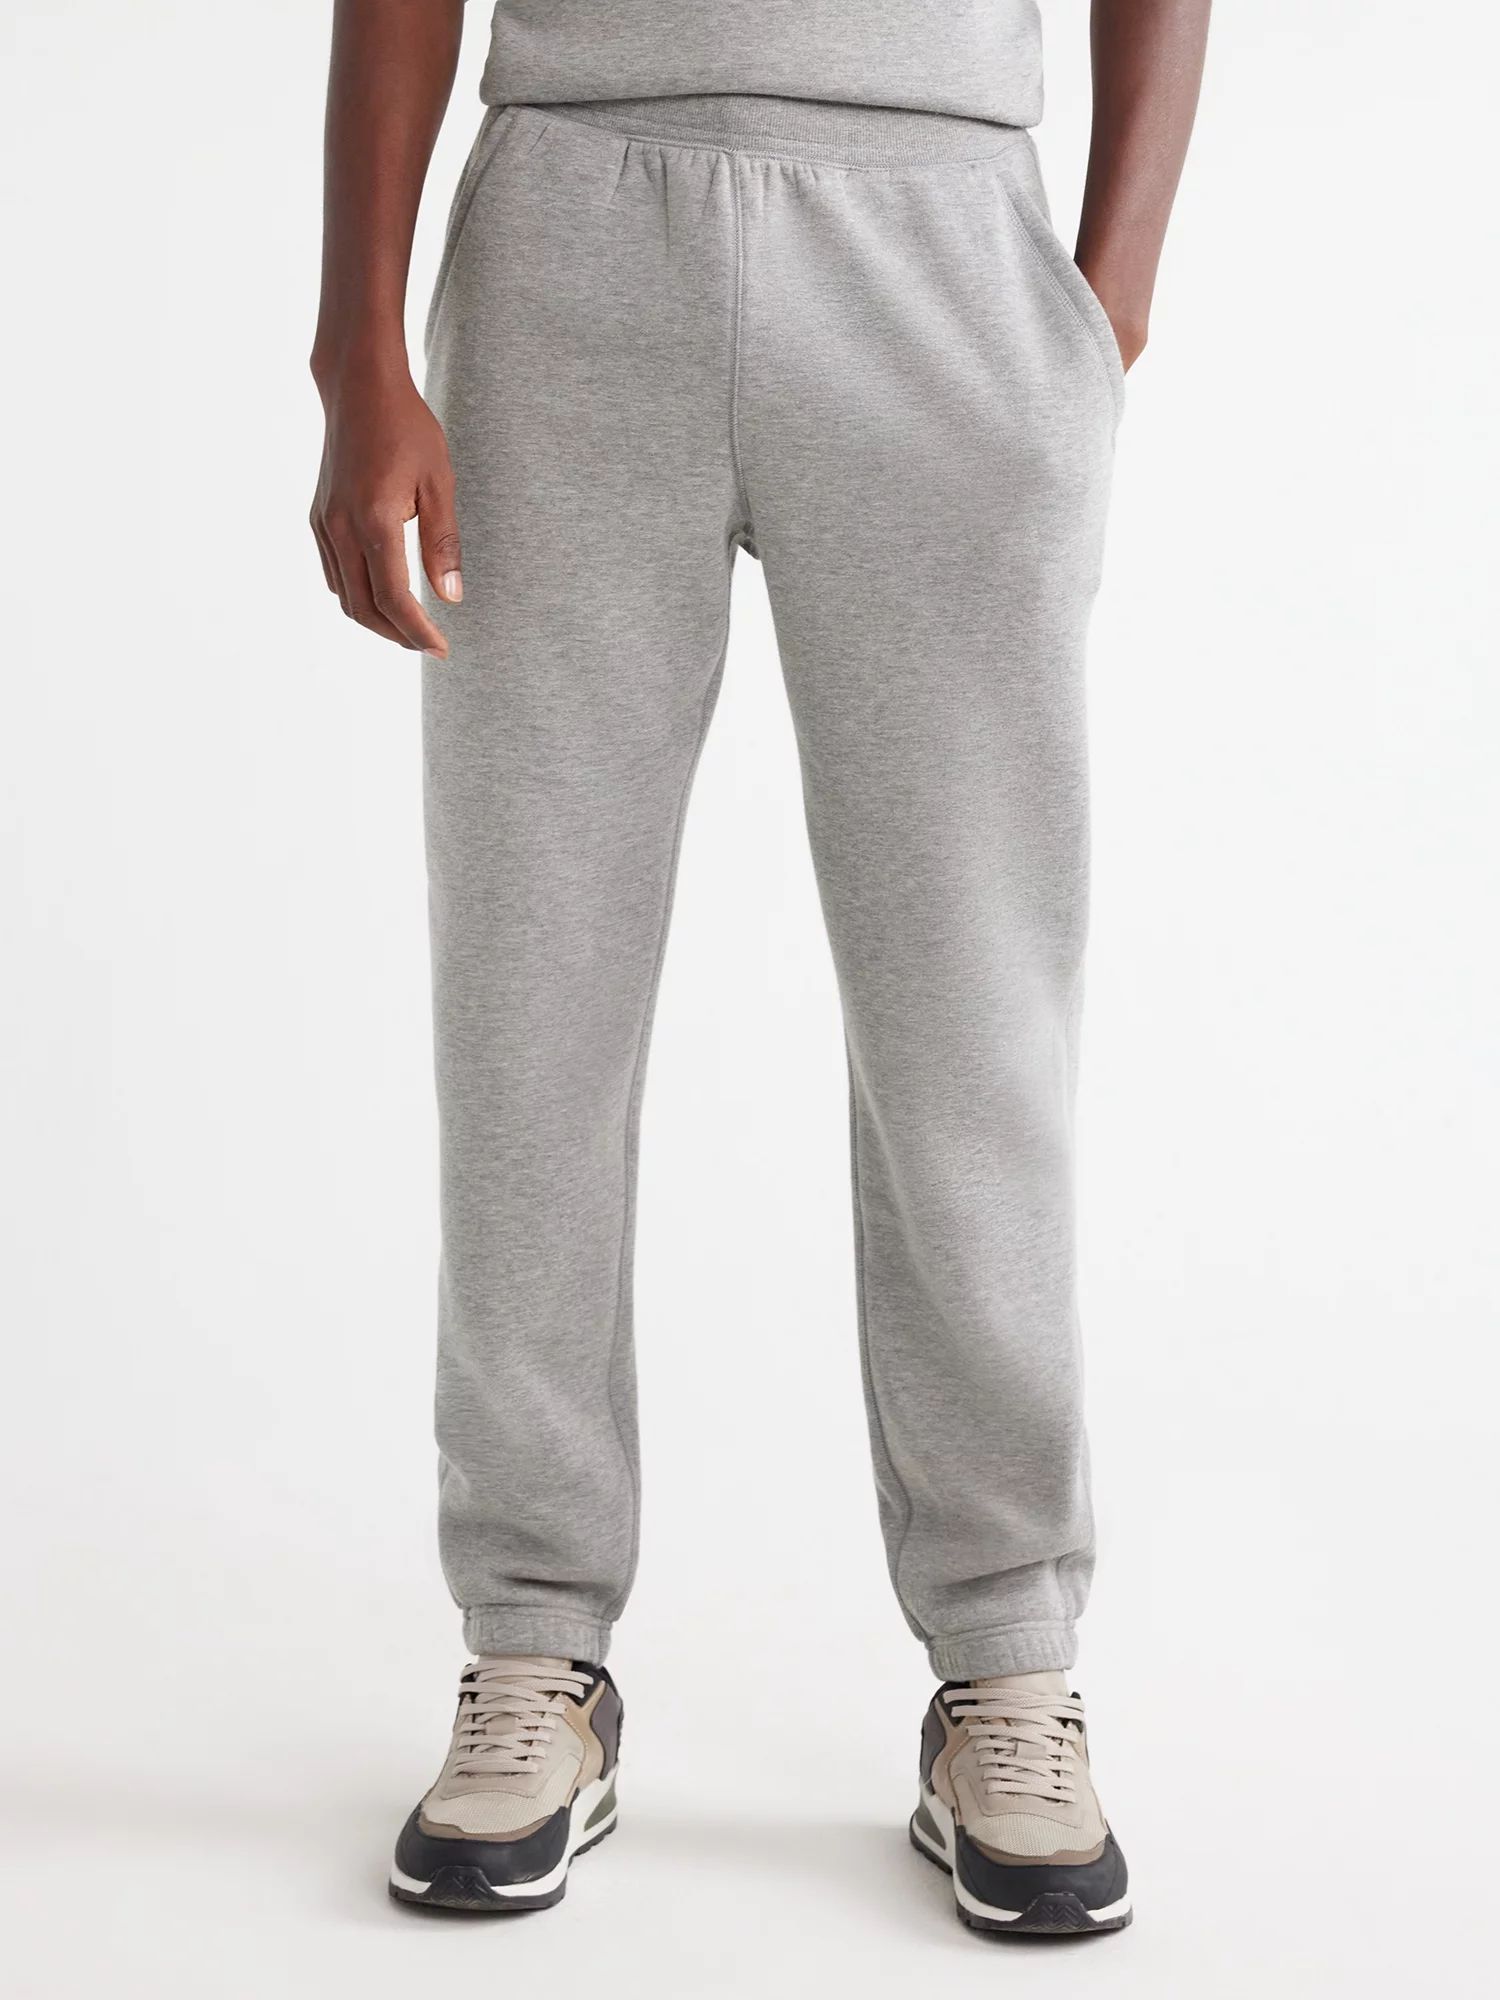 Free Assembly Men's Fleece Pants, 30" Inseam, Sizes XS-3XL | Walmart (US)